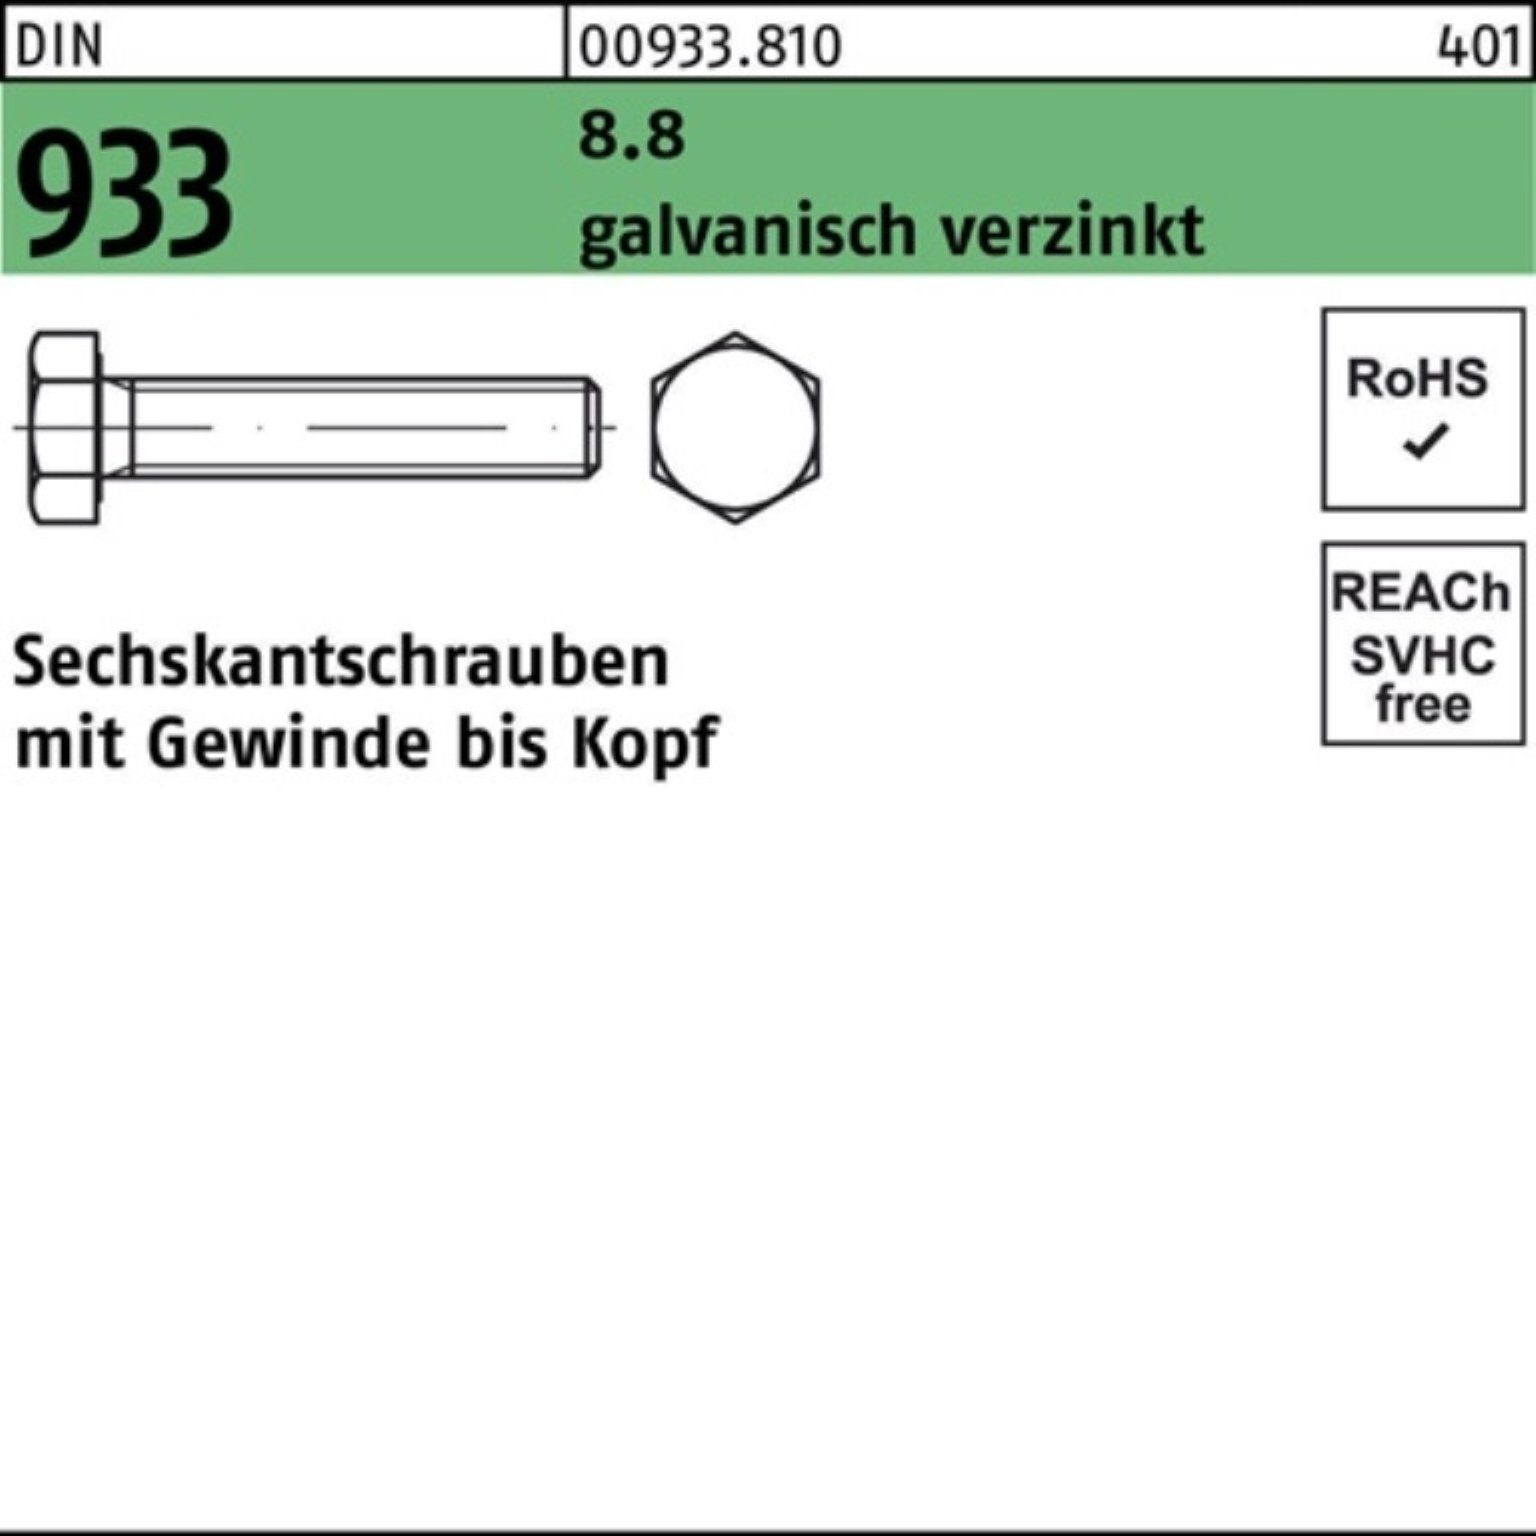 Reyher Sechskantschraube 500er Pack Sechskantschraube 10 VG 500 DIN M3x 8.8 933 galv.verz. Stü